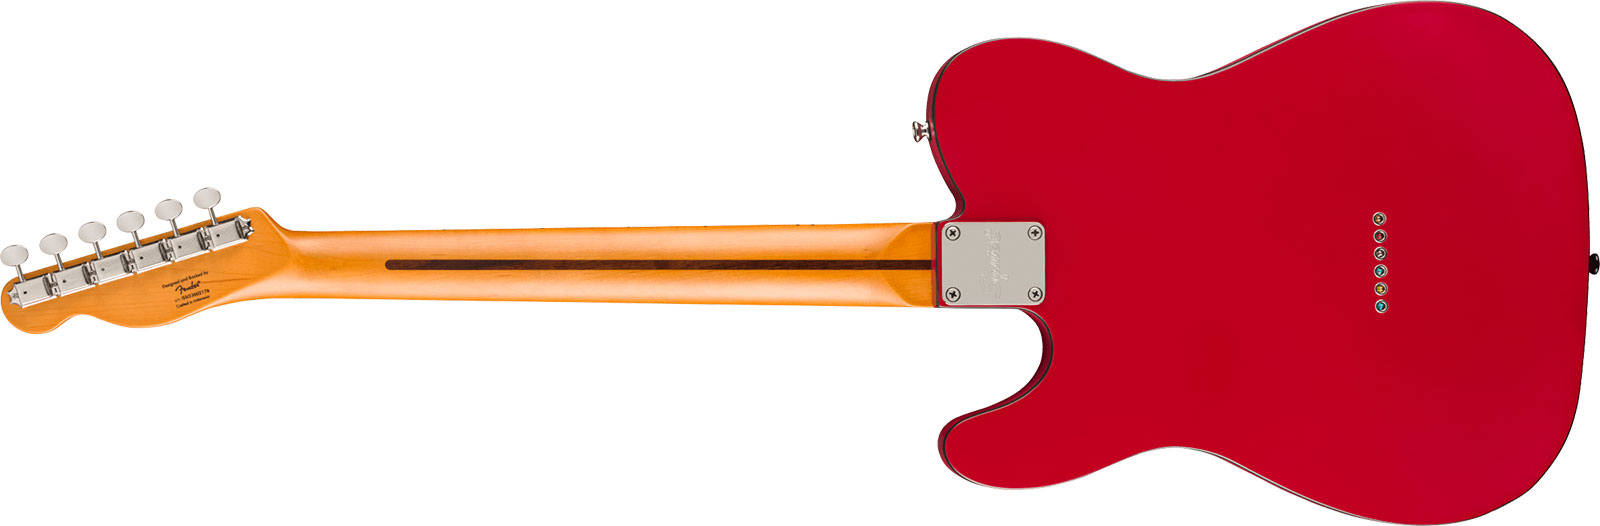 Squier Tele 60s Custom Classic Vibe Ltd 2s Ht Mn - Satin Dakota Red - Televorm elektrische gitaar - Variation 1